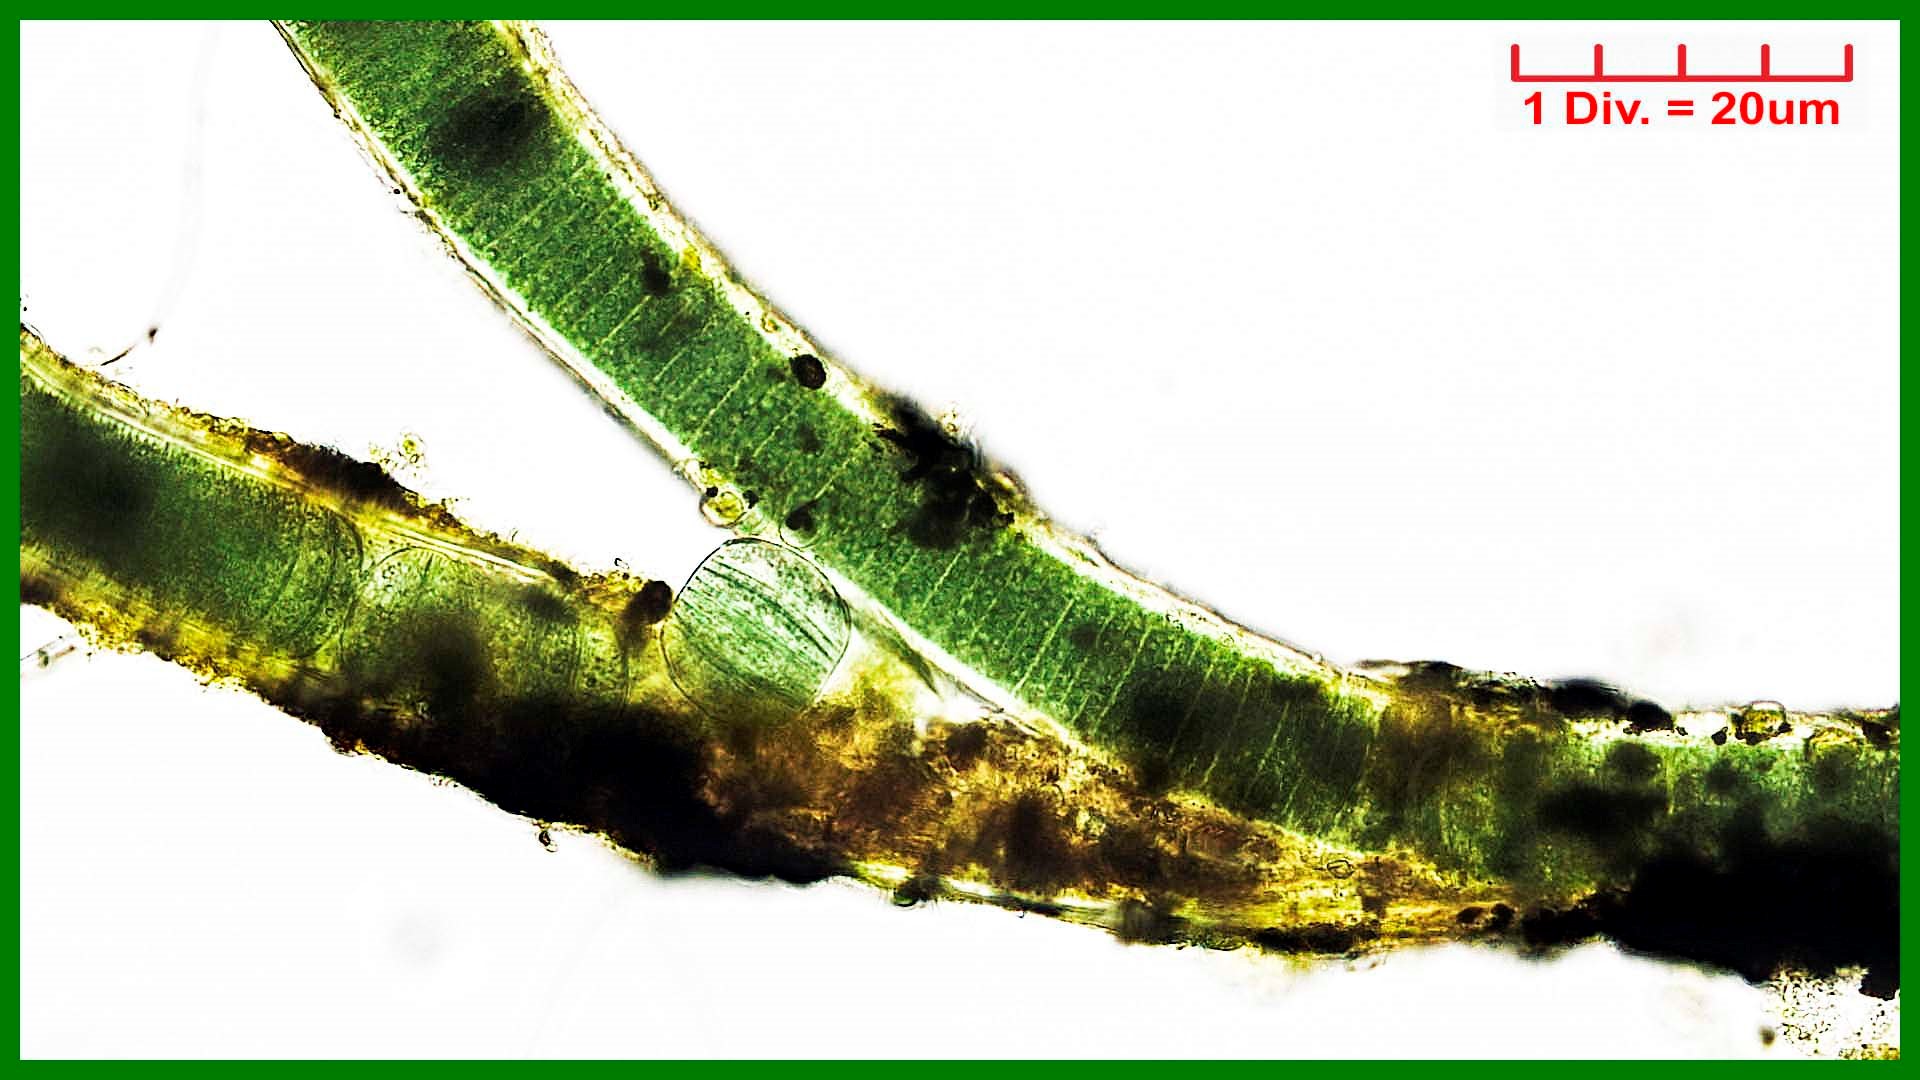 ././././Cyanobacteria/Oscillatoriales/Oscillatoriaceae/Plectonema/wollei/plectonema-wollei-206.jpg